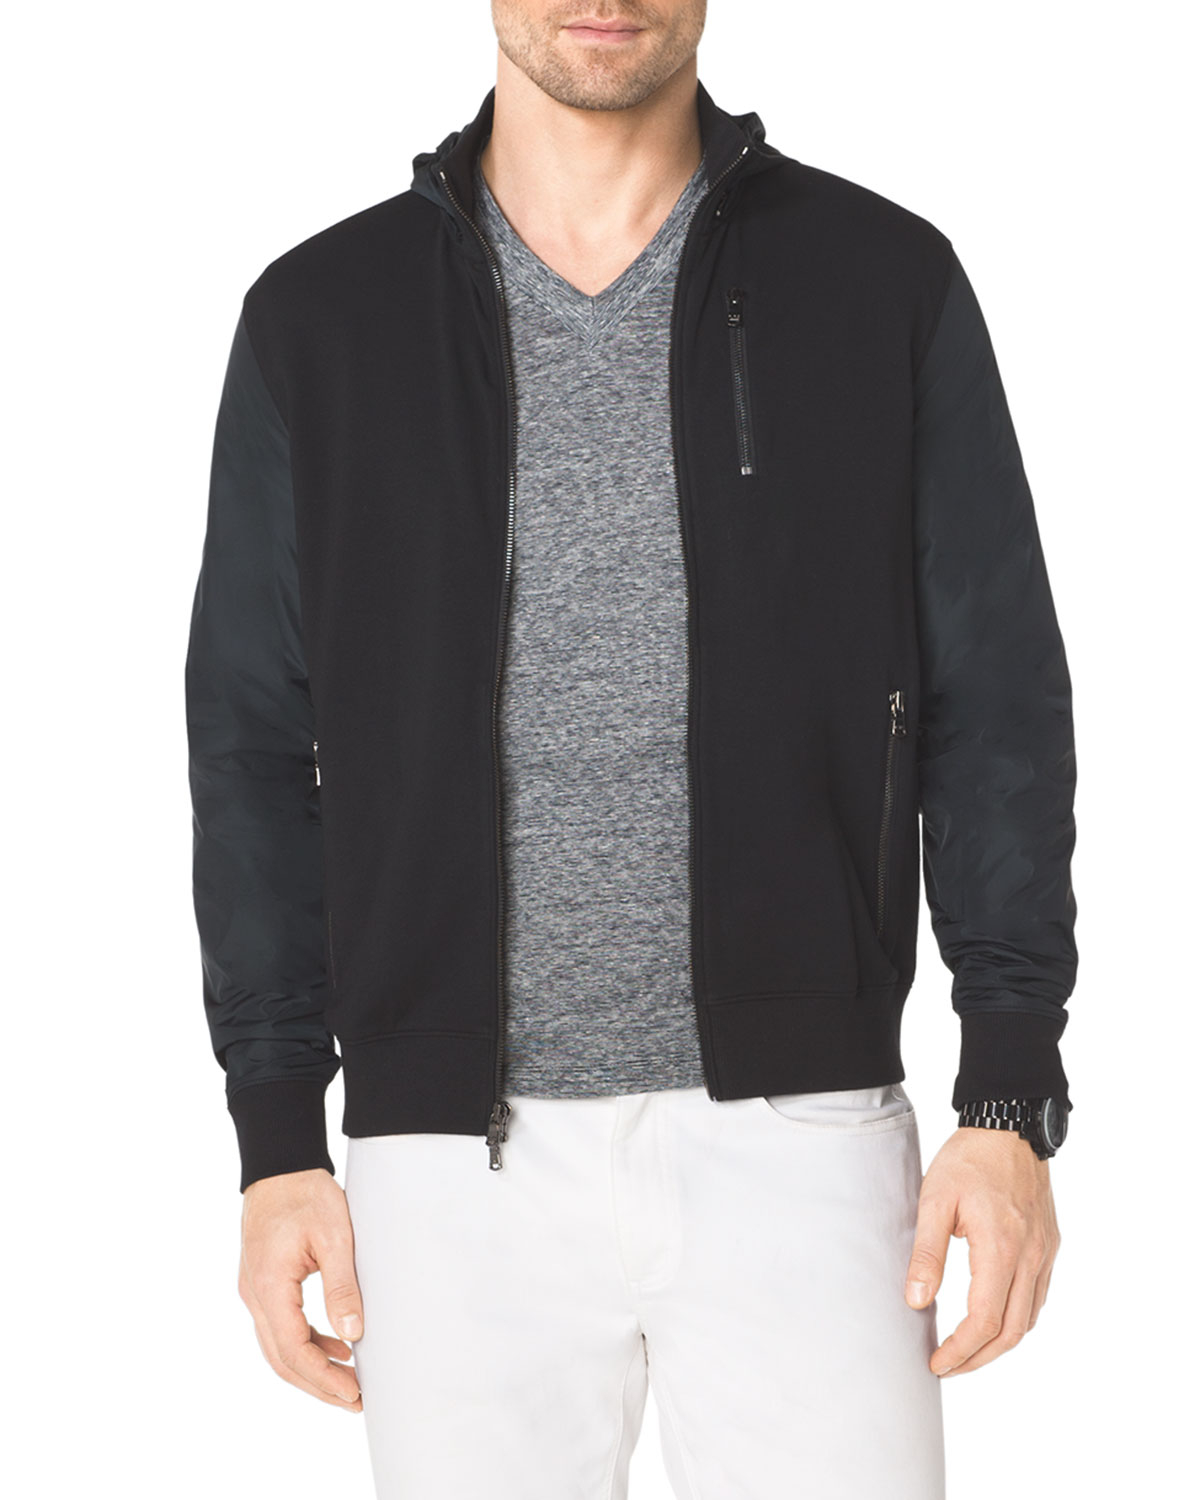 Lyst - Michael Kors Fleece/Nylon Zip Hooded Jacket in Black for Men